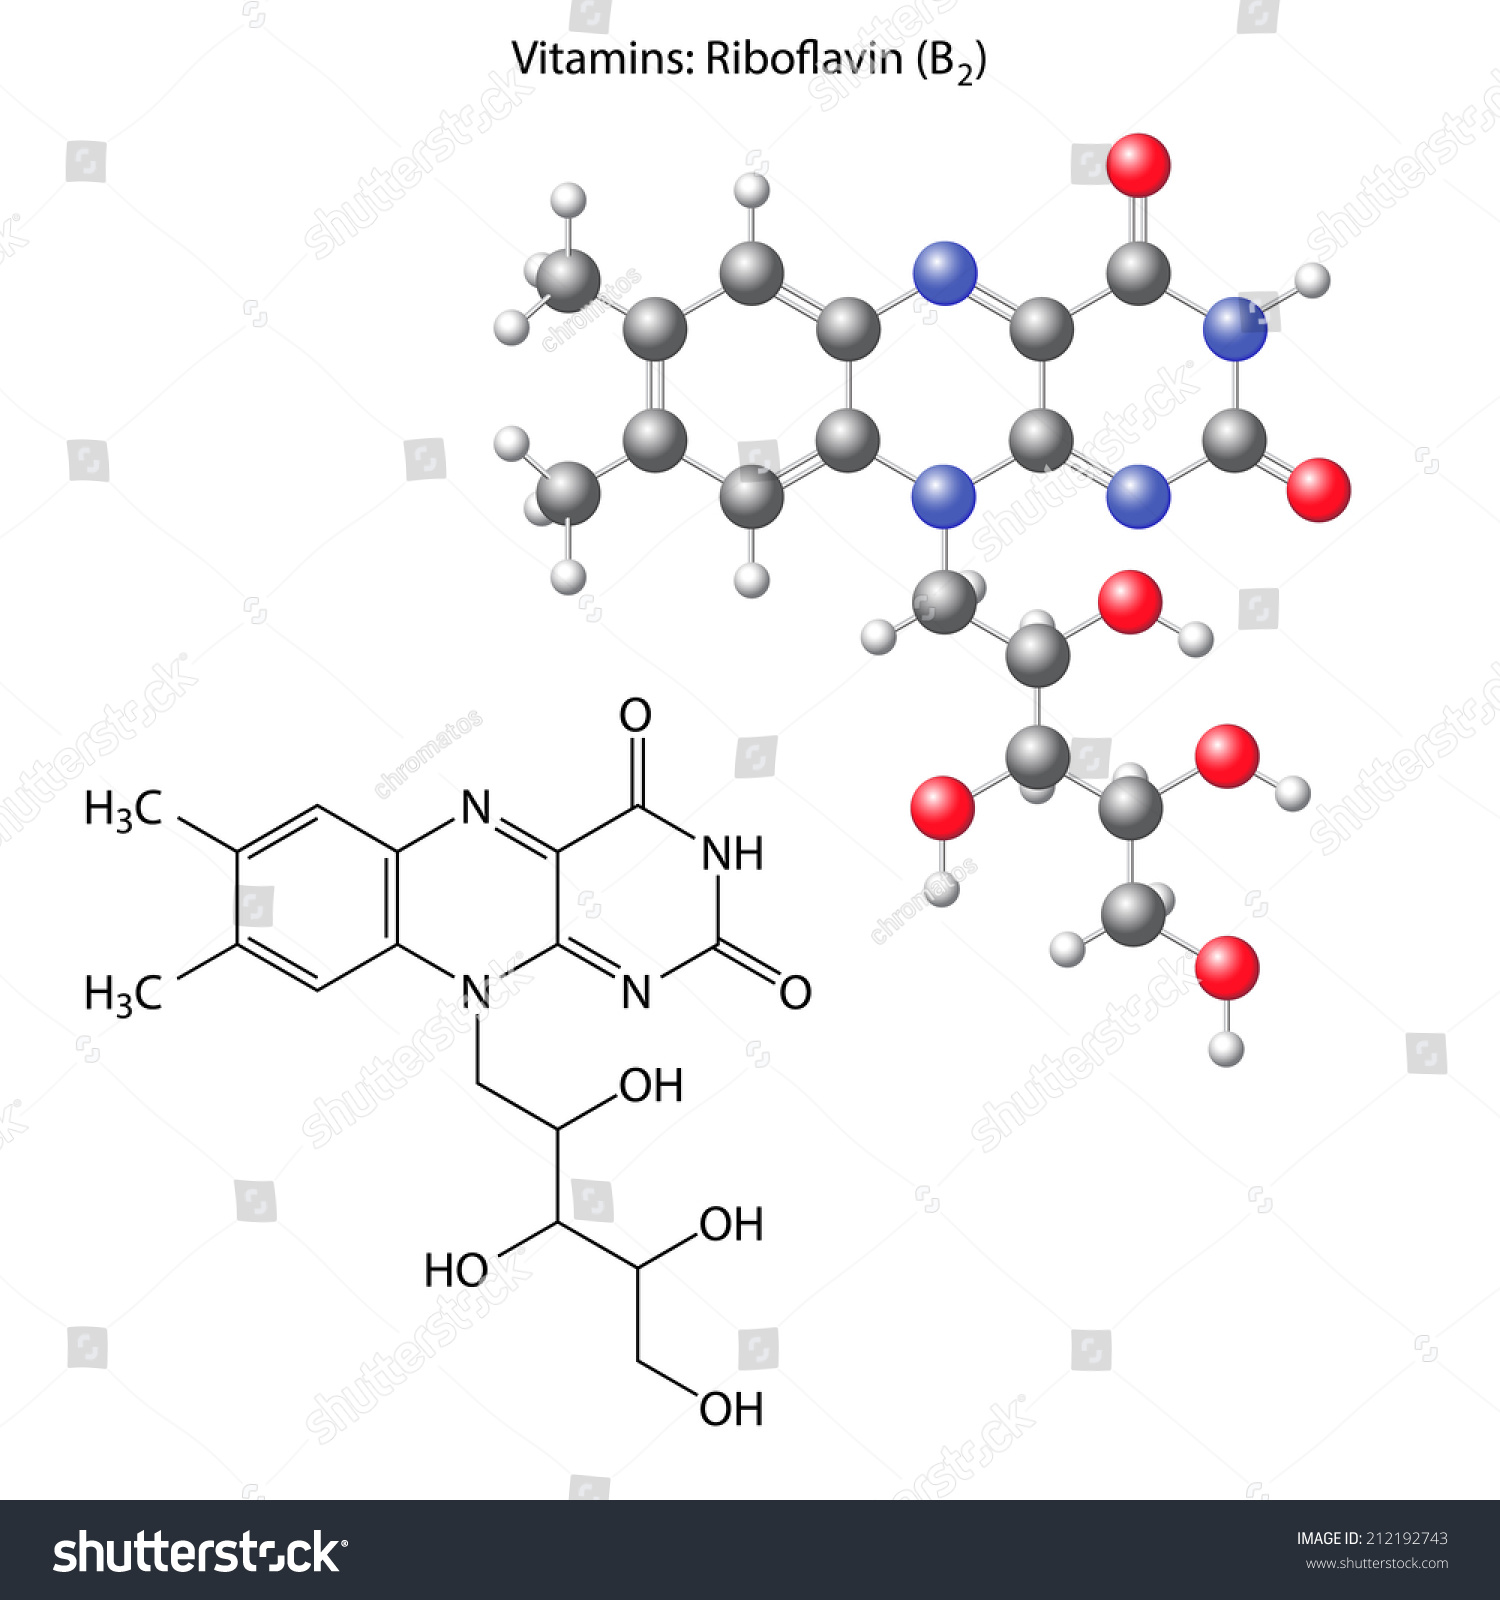 Riboflavin Molecule Vitamin B2 Structural Chemical Formula And Model 3d Illustration 3986